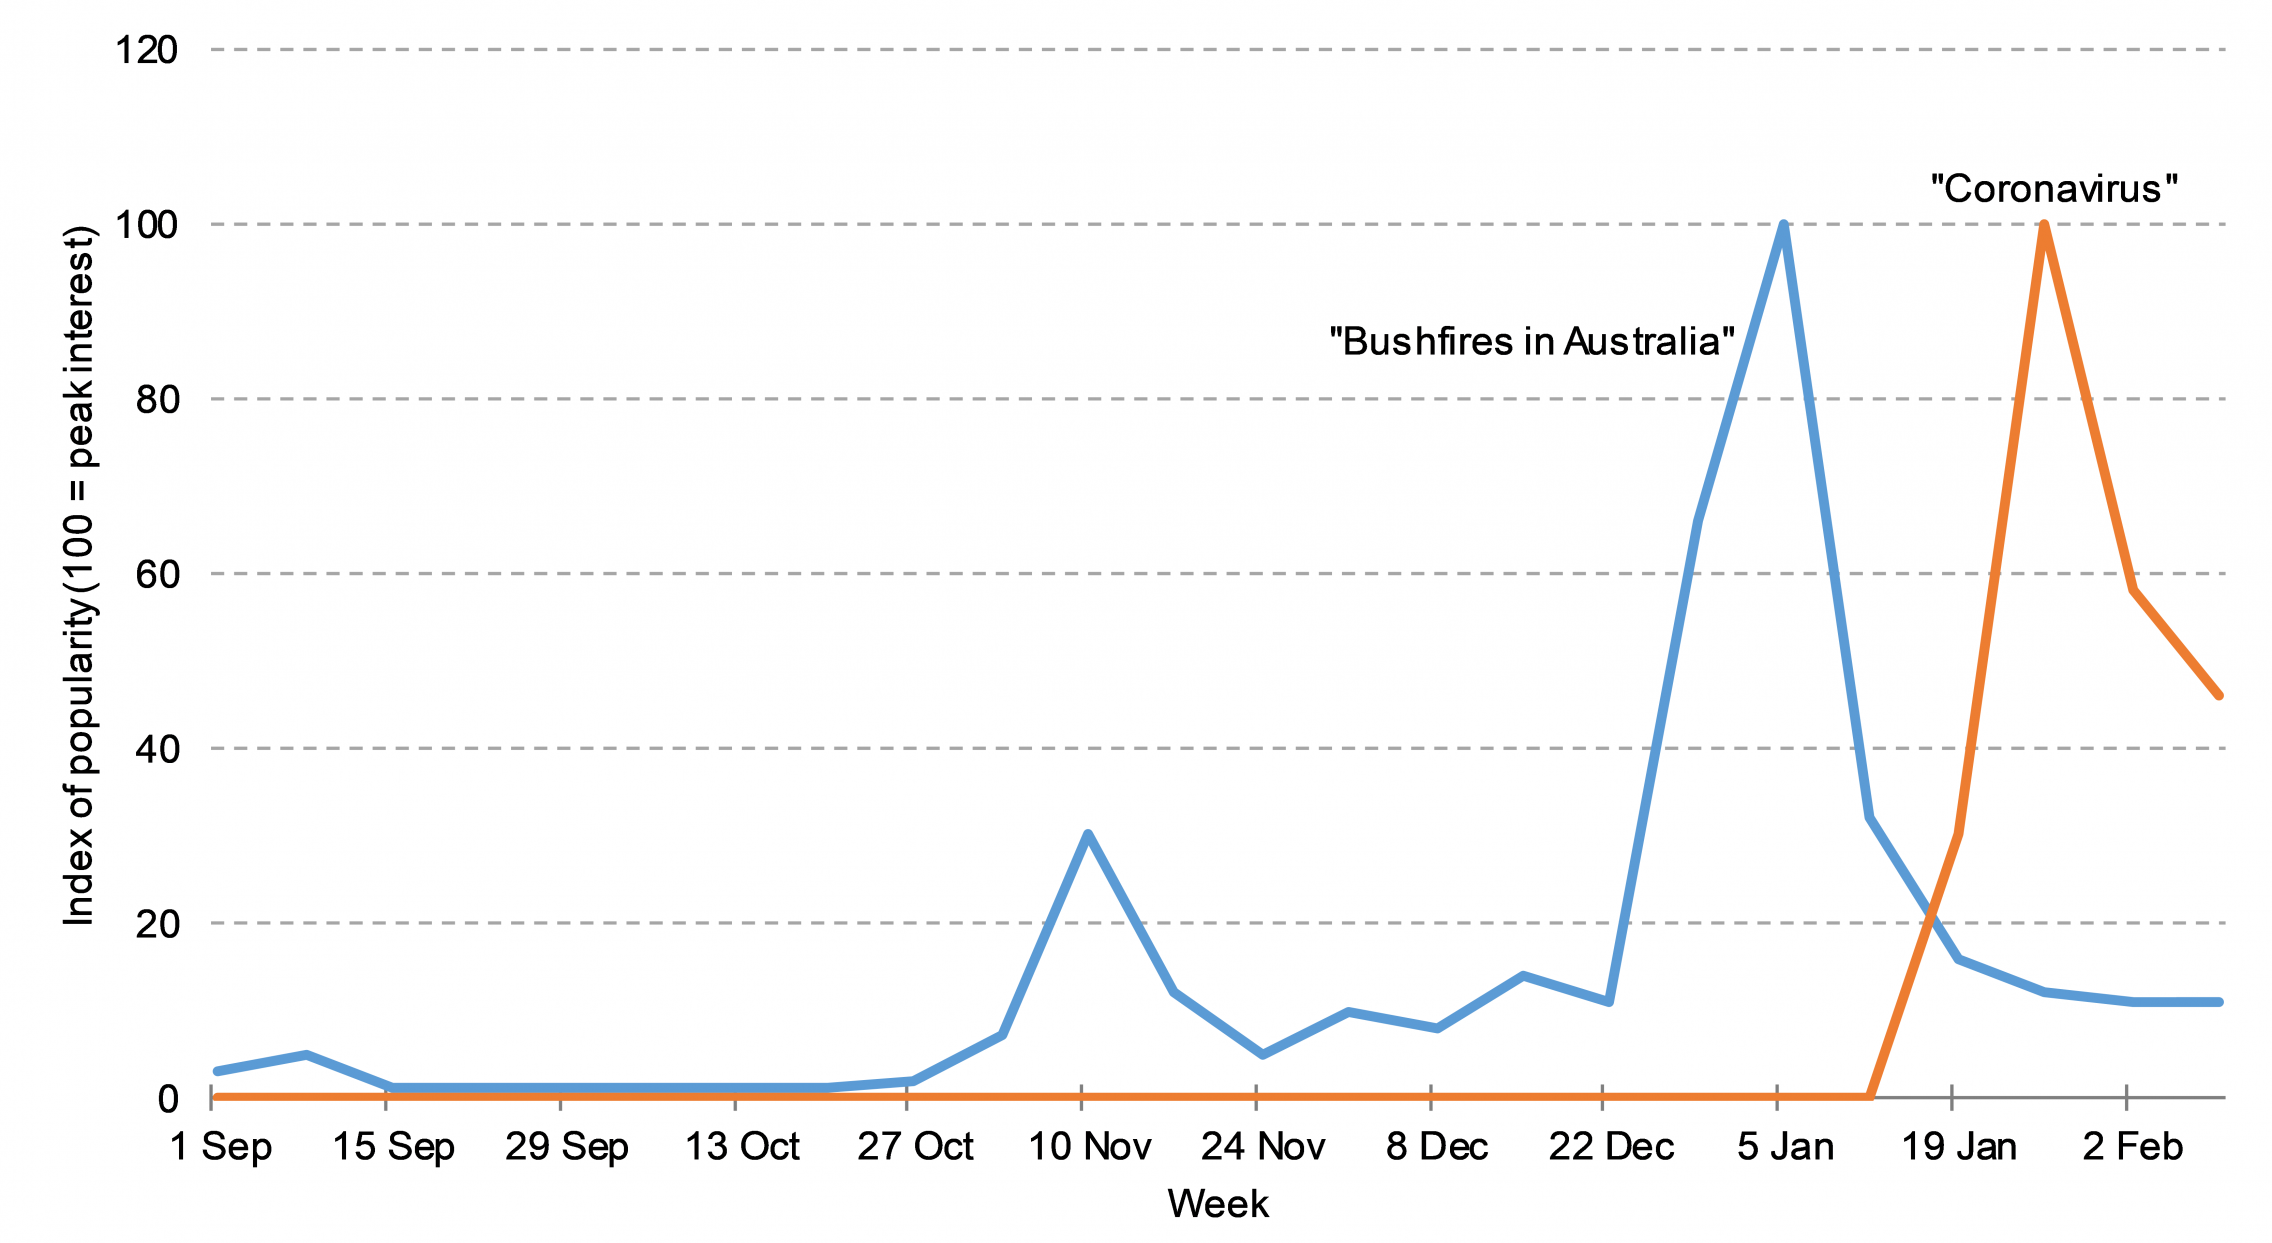 Google search popularity of the terms bushfires in Australia and coronavirus